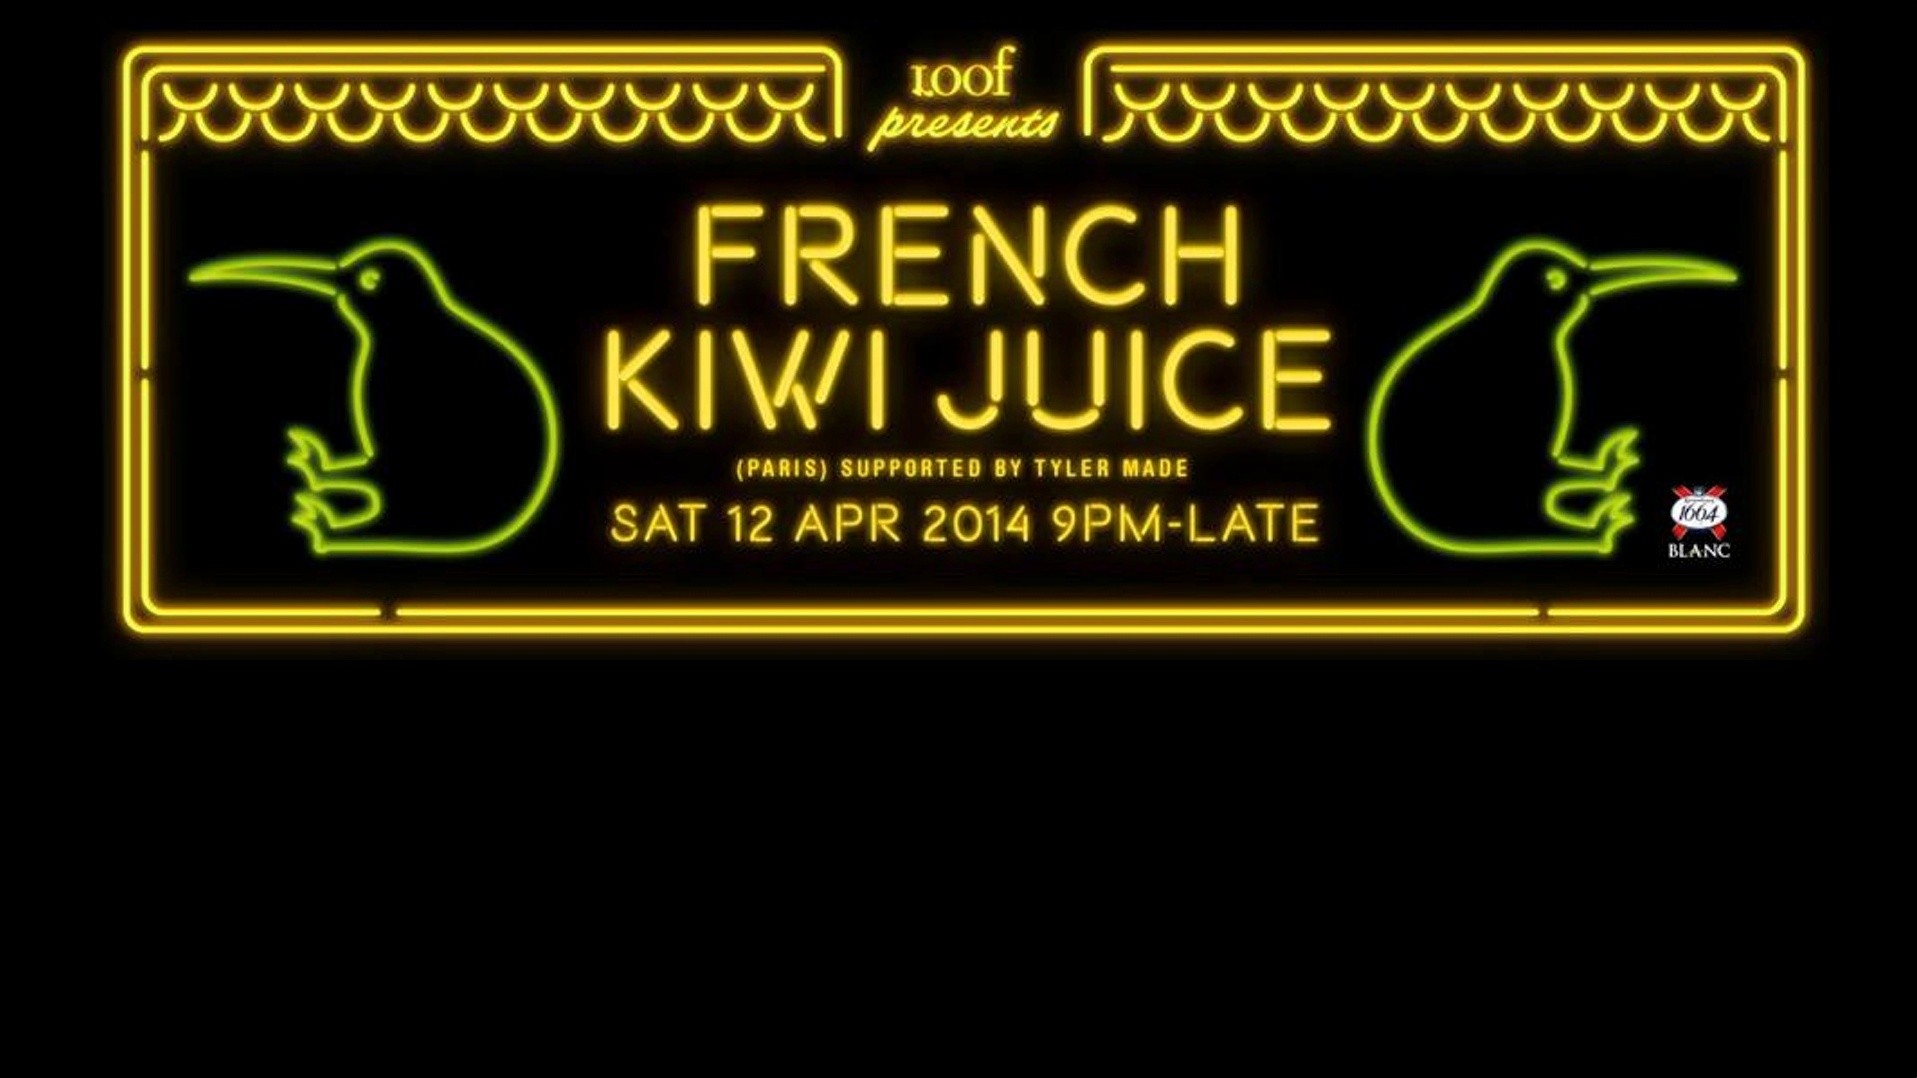 Loof presents: French Kiwi Juice